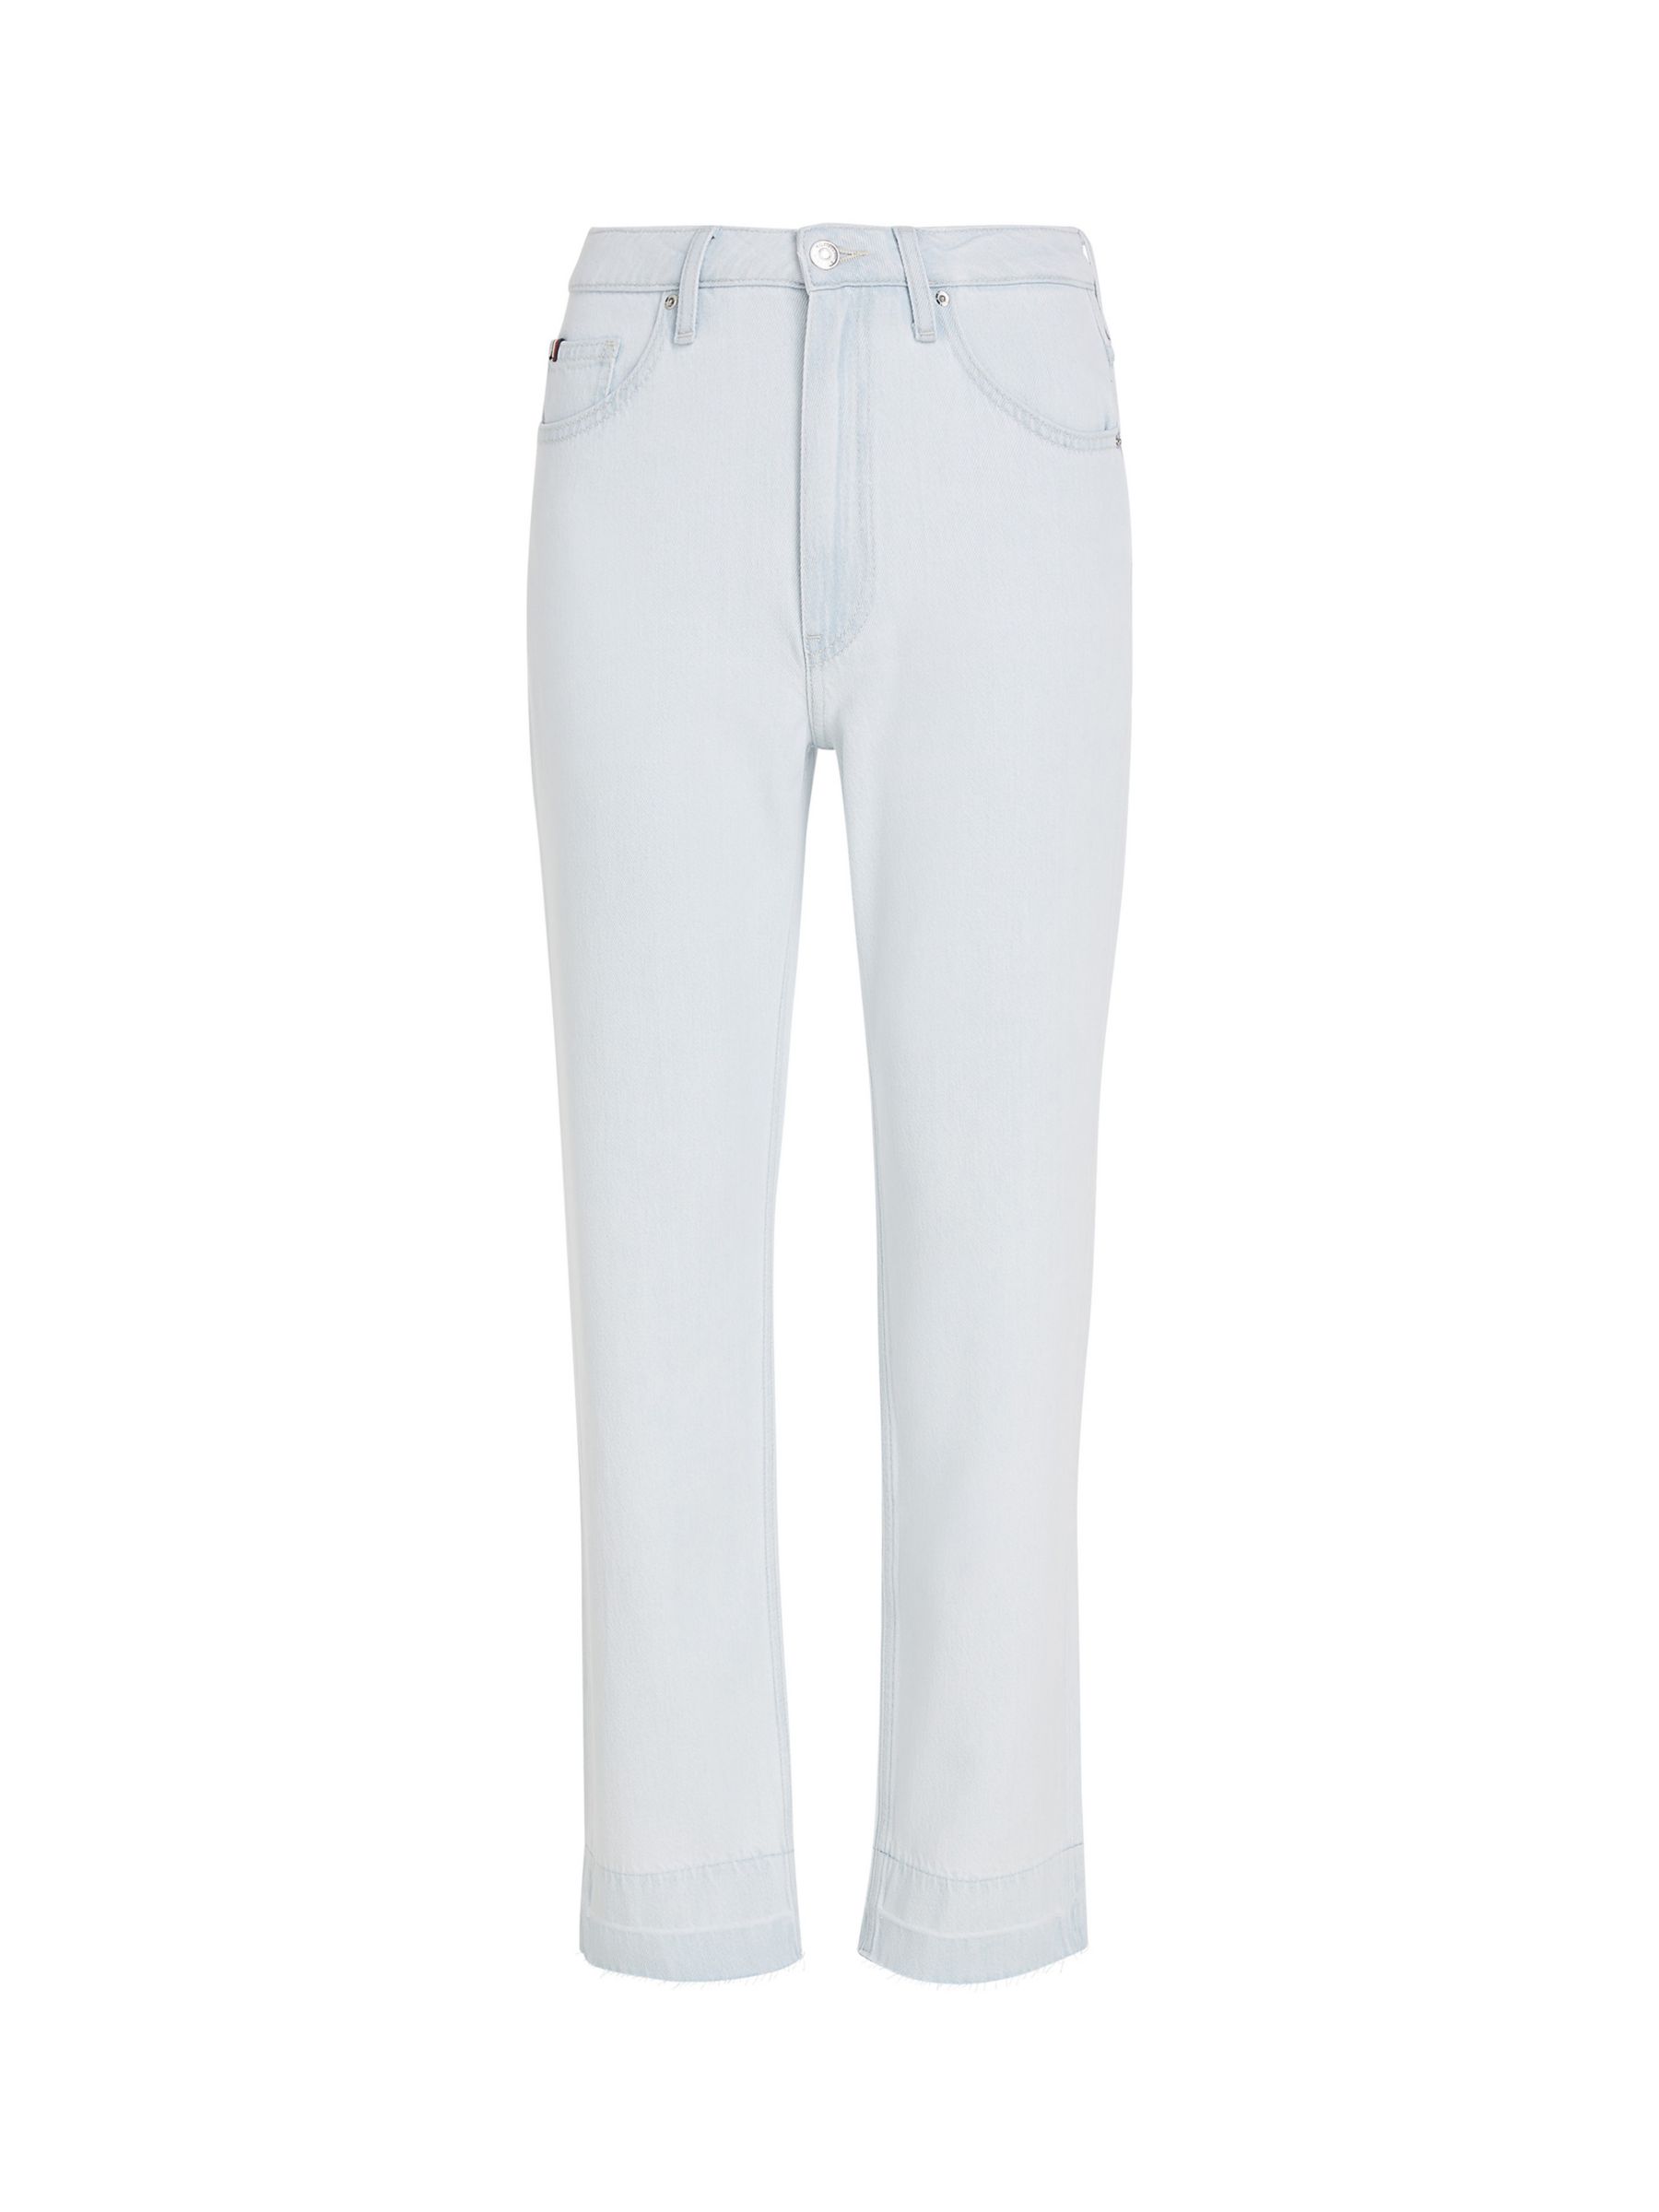 Tommy Hilfiger Women's Kira Straight Jeans, Light Blue, 25S